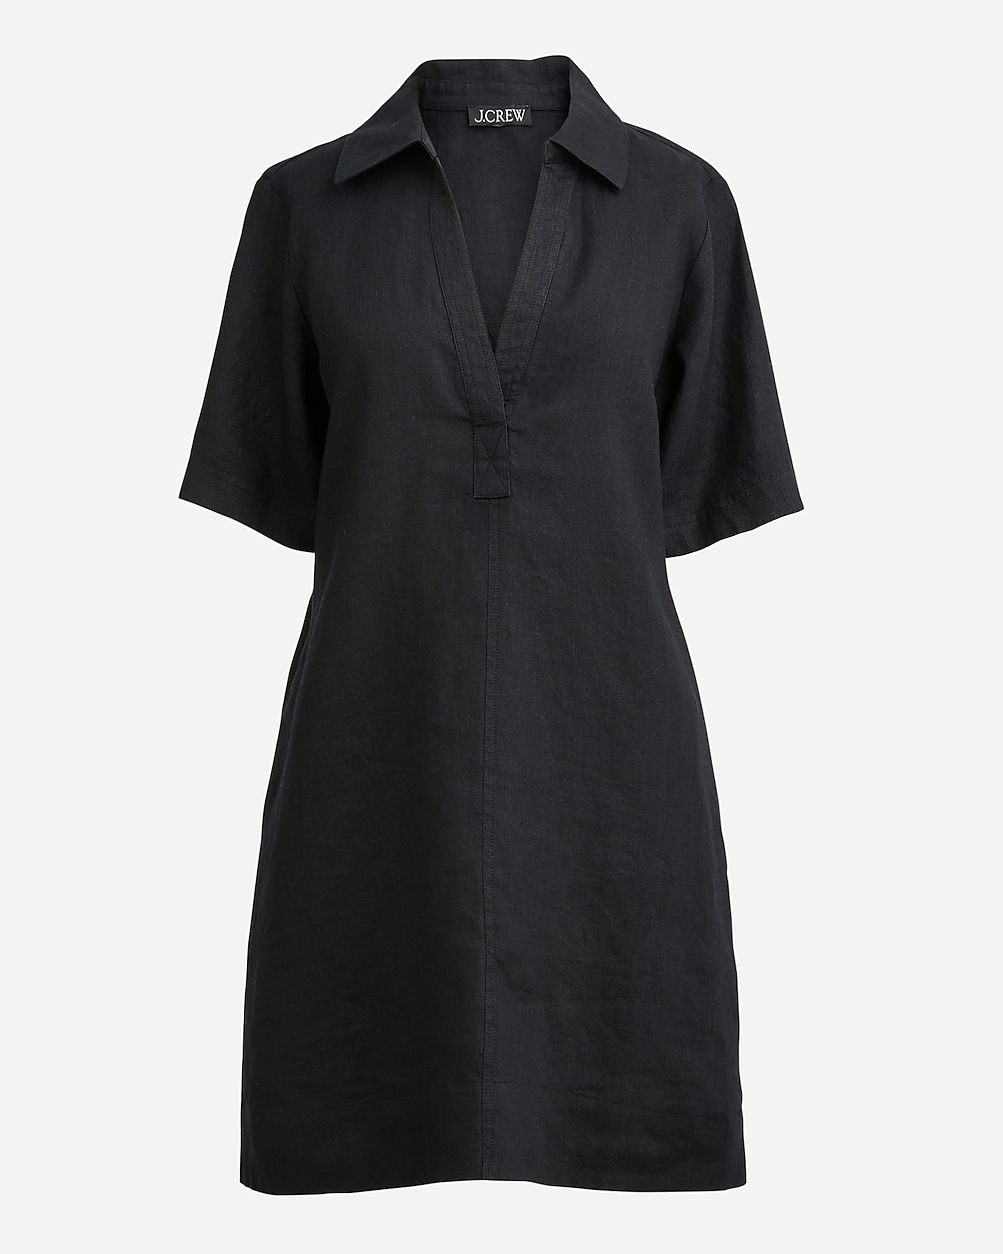 best seller4.6(92 REVIEWS)Bungalow popover dress in linen$118.00-$128.00Black$128.00$118.00Classi... | J.Crew US